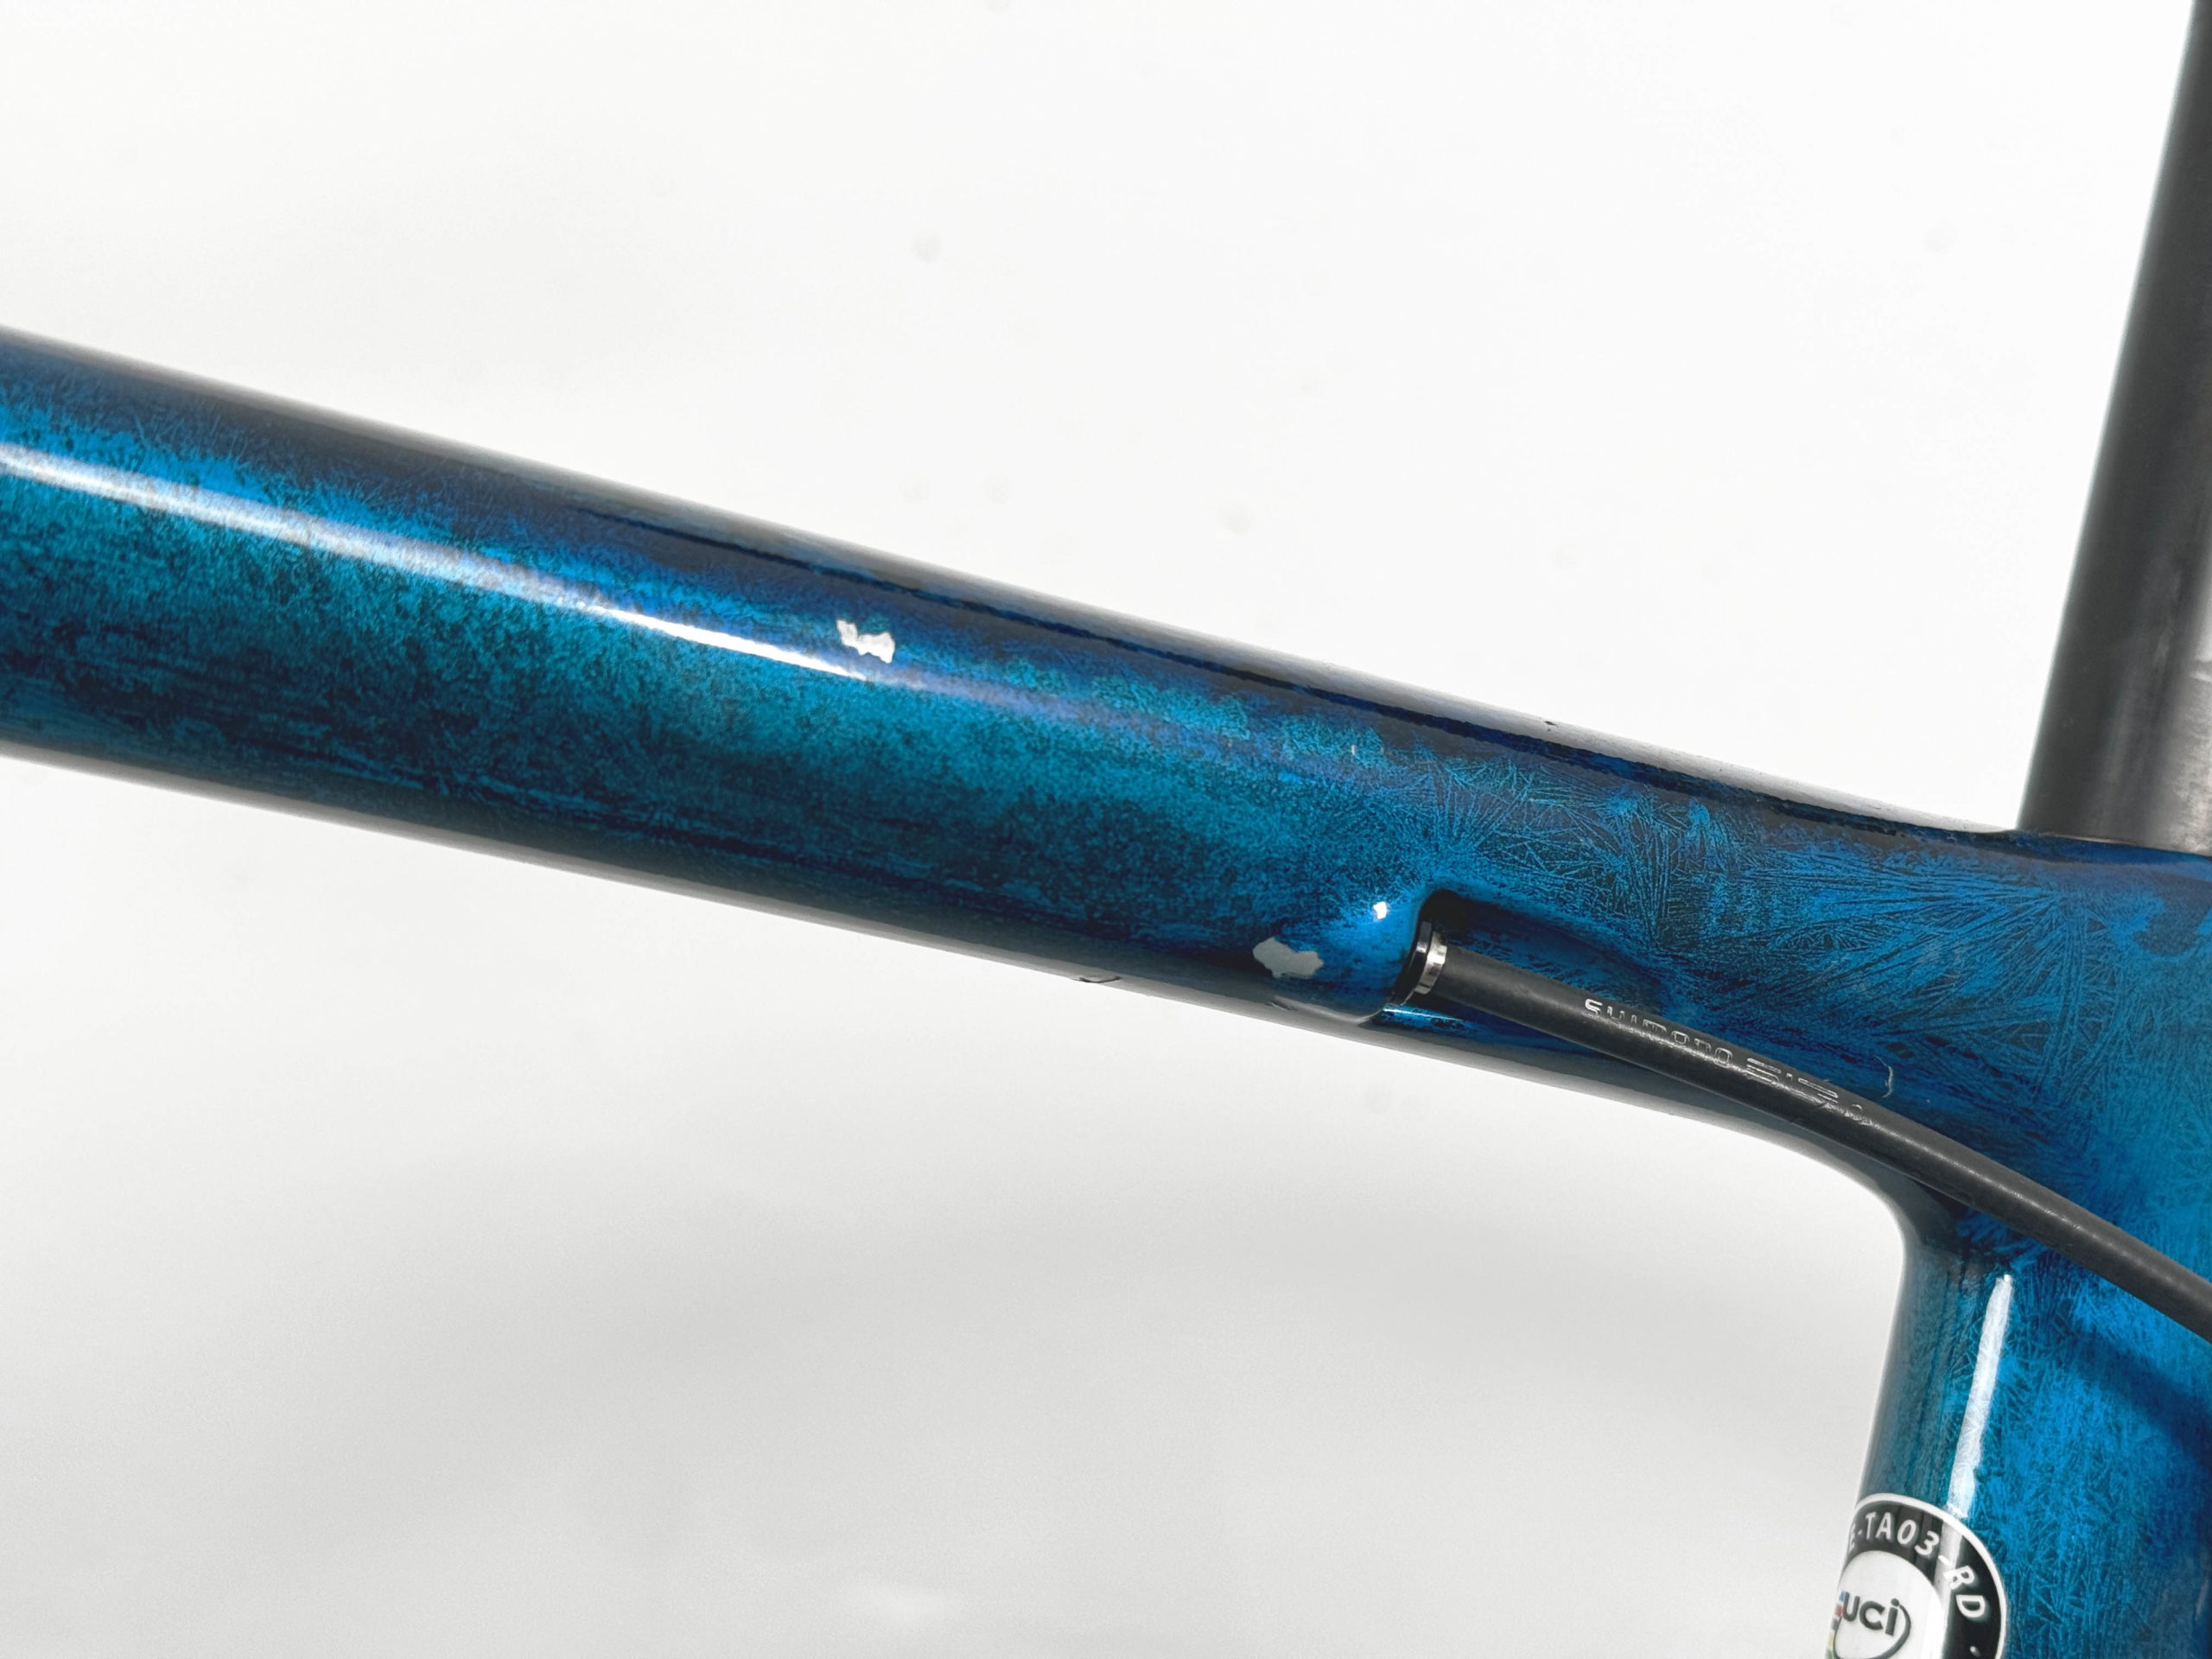 Road Bike Specialized Tarmac SL6 S-Works Shimano Ultegra Di2/ Roues carbone artisanales Bleu